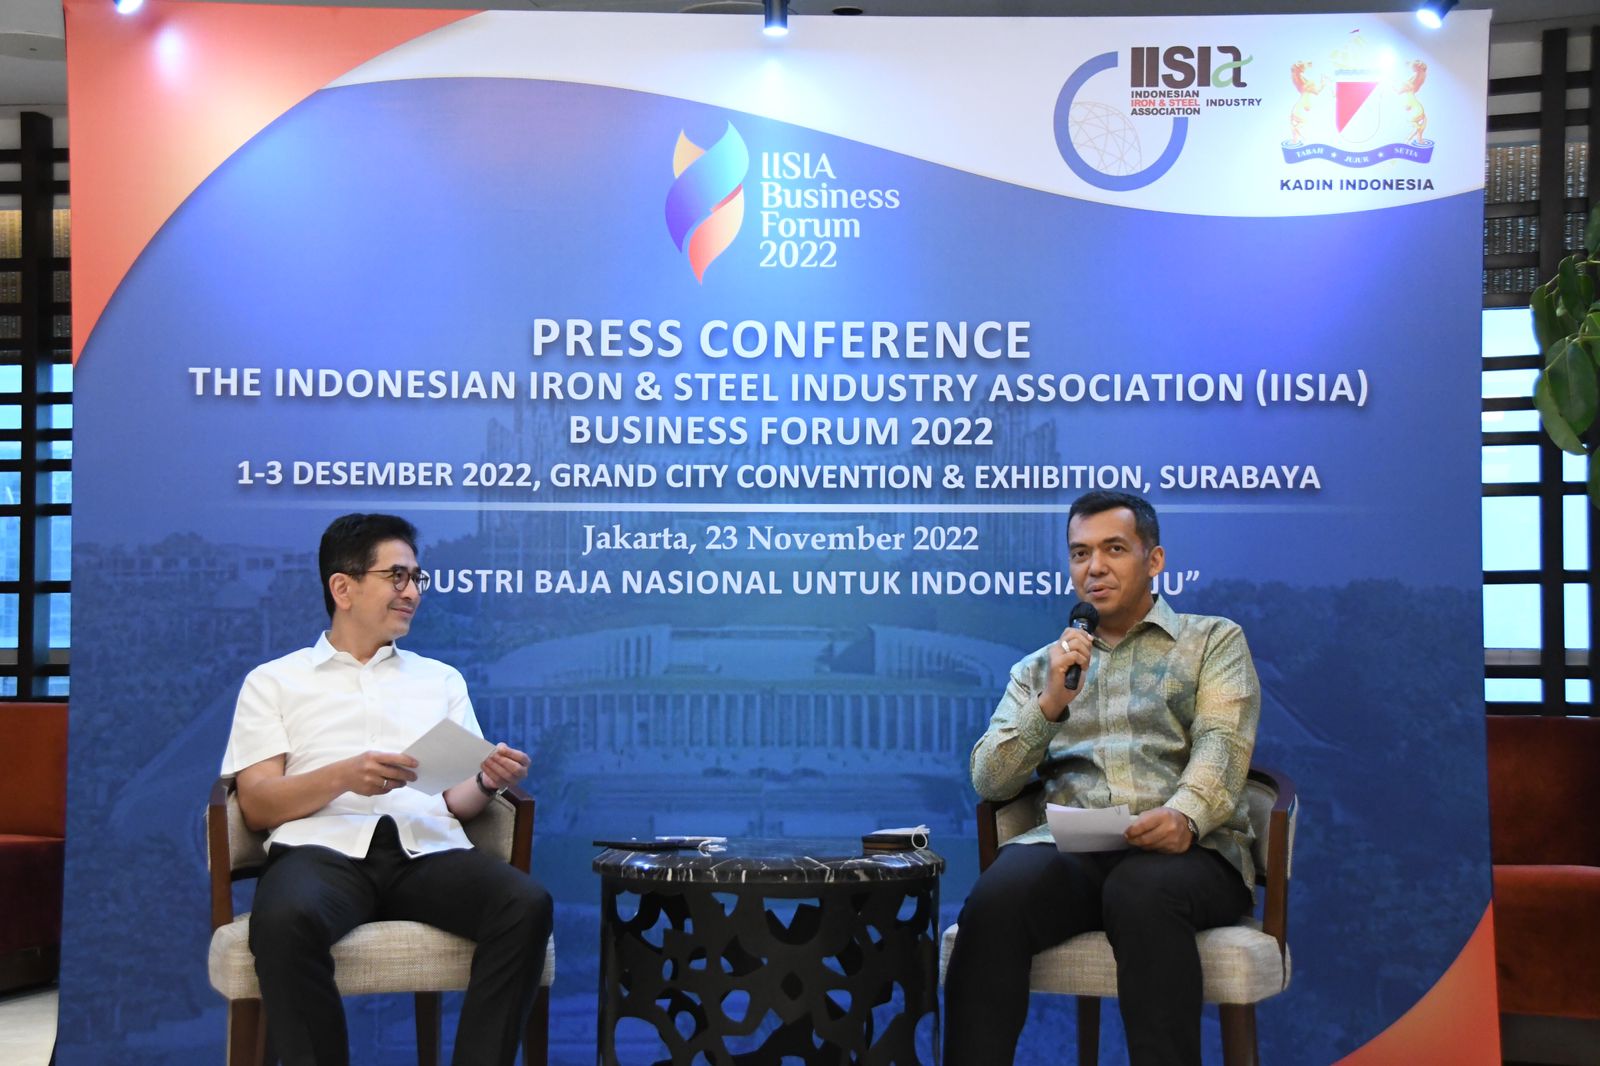 Ketua Umum KADIN Indonesia Arsjad Rasjid dan Chairman IISIA Silmy Karim saat press conference IISIA Business Forum 2022
